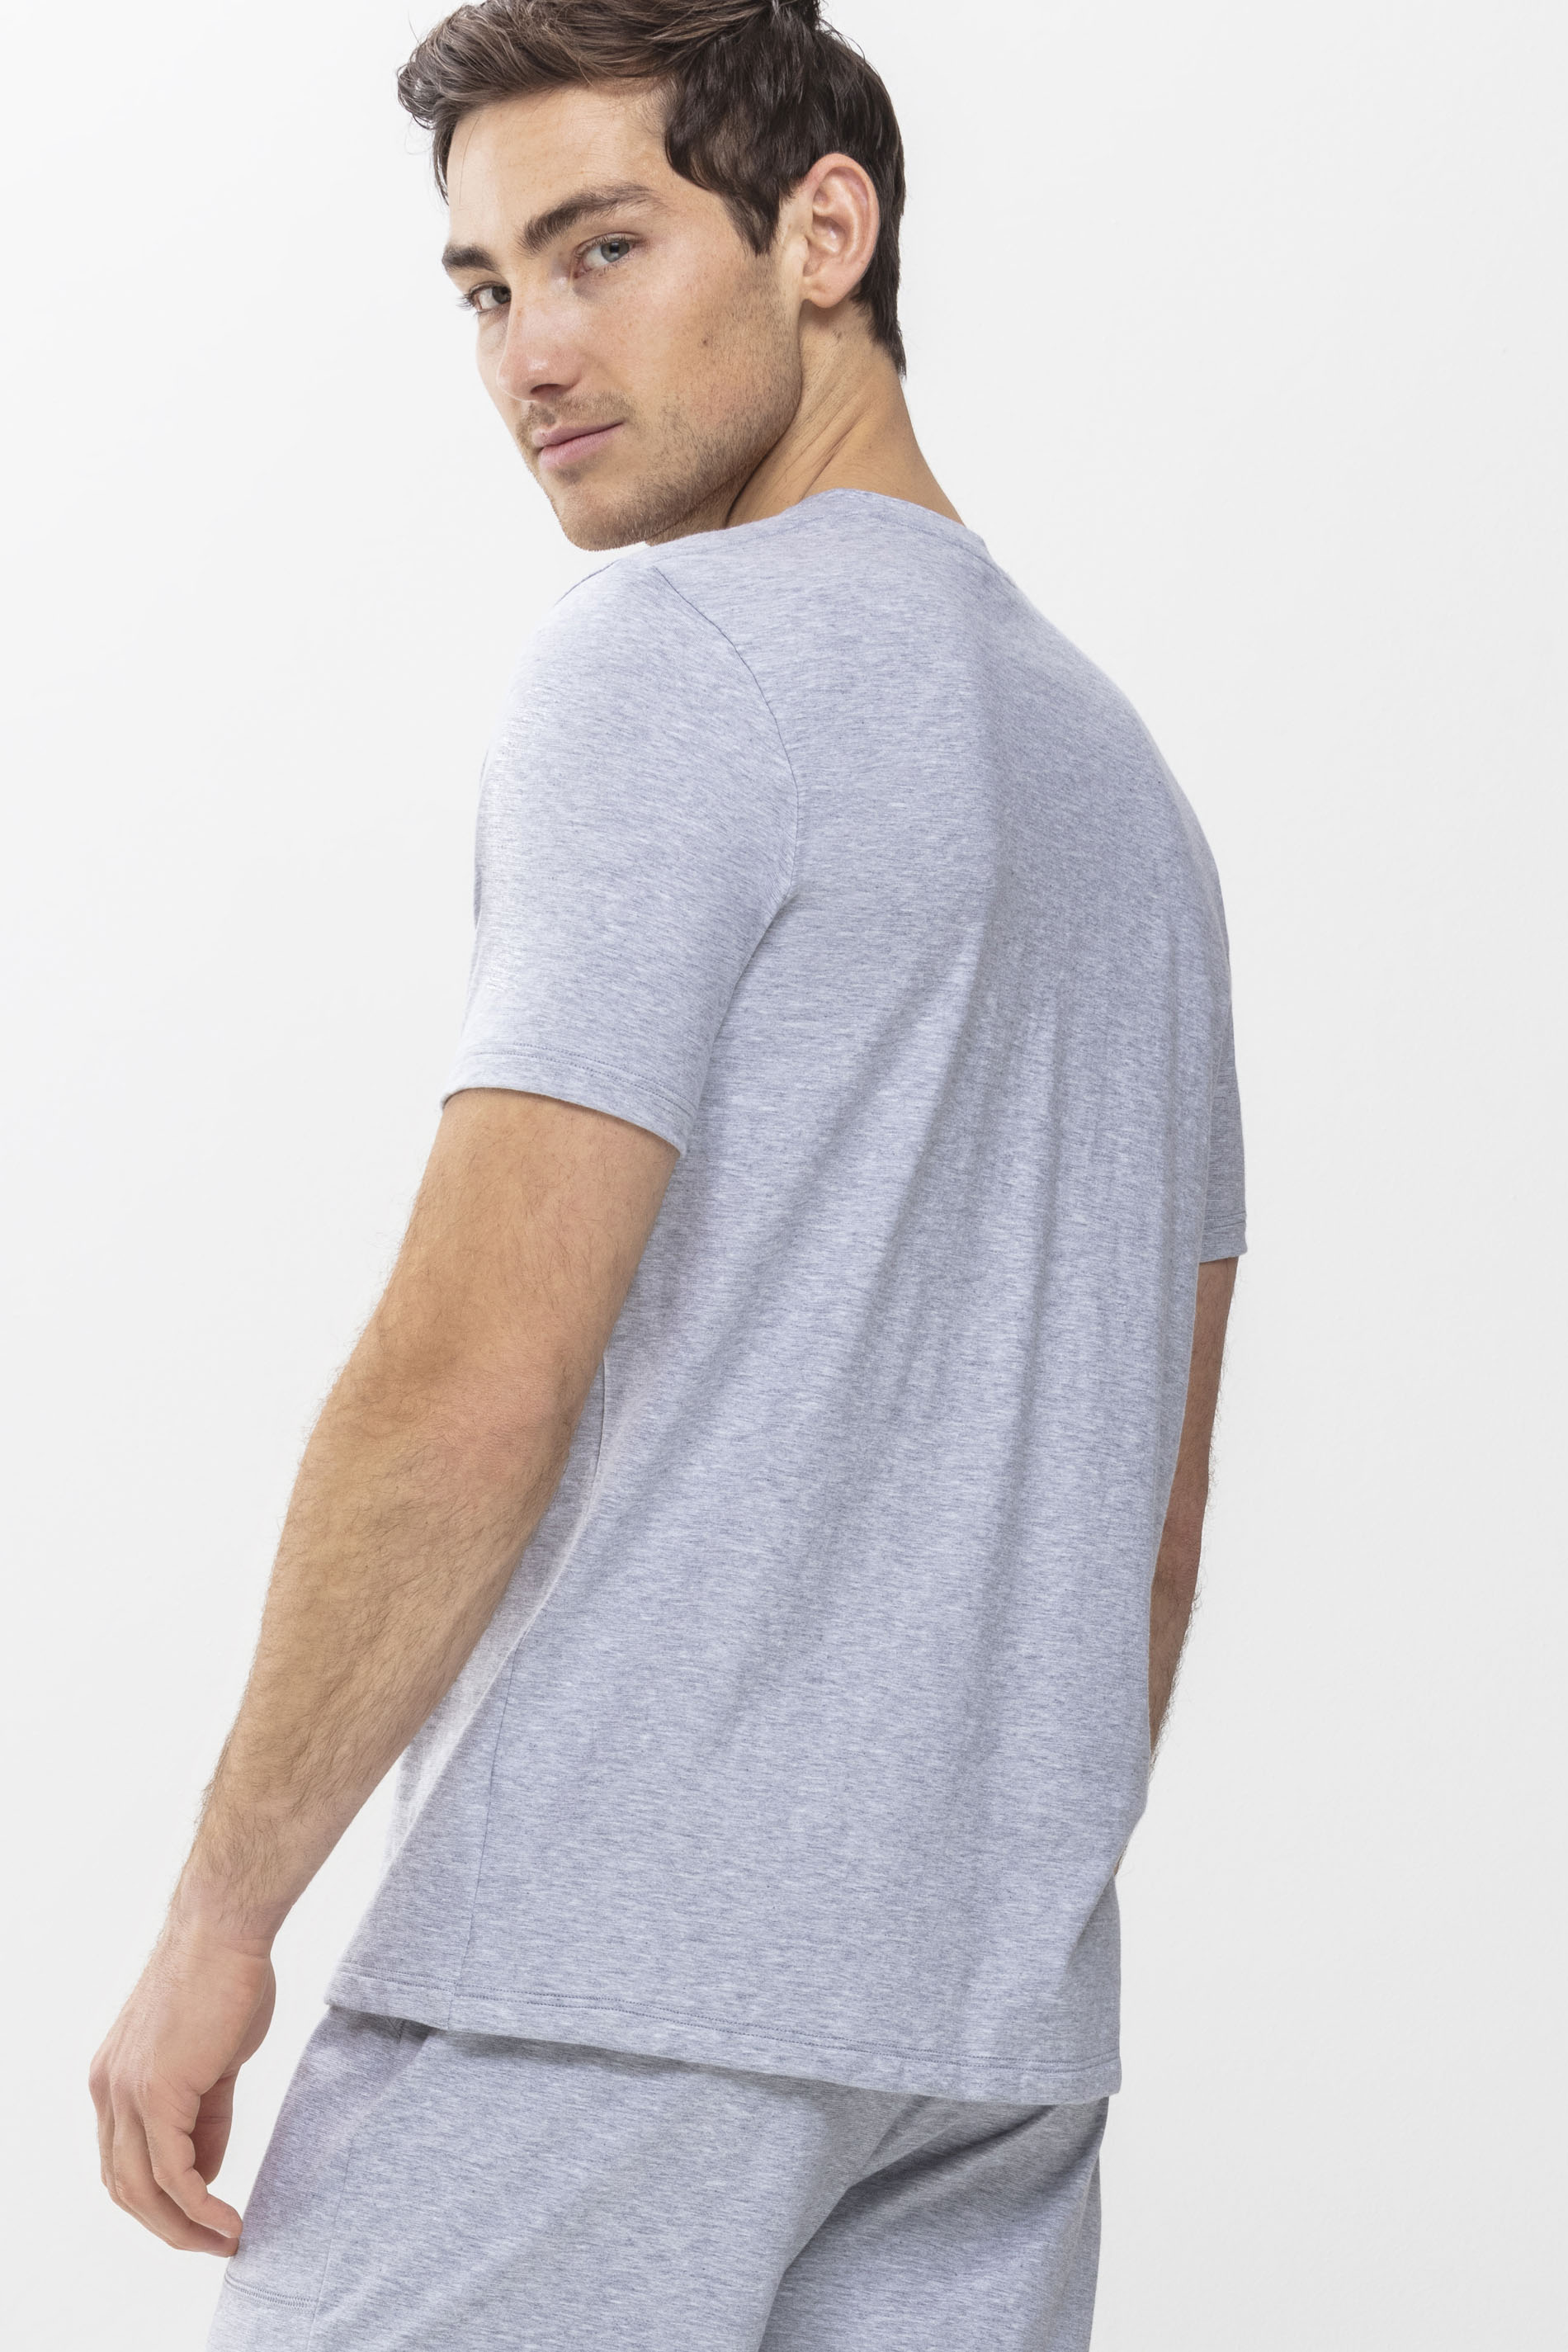 Shirt Light Grey Melange Serie Ringwood Rear View | mey®